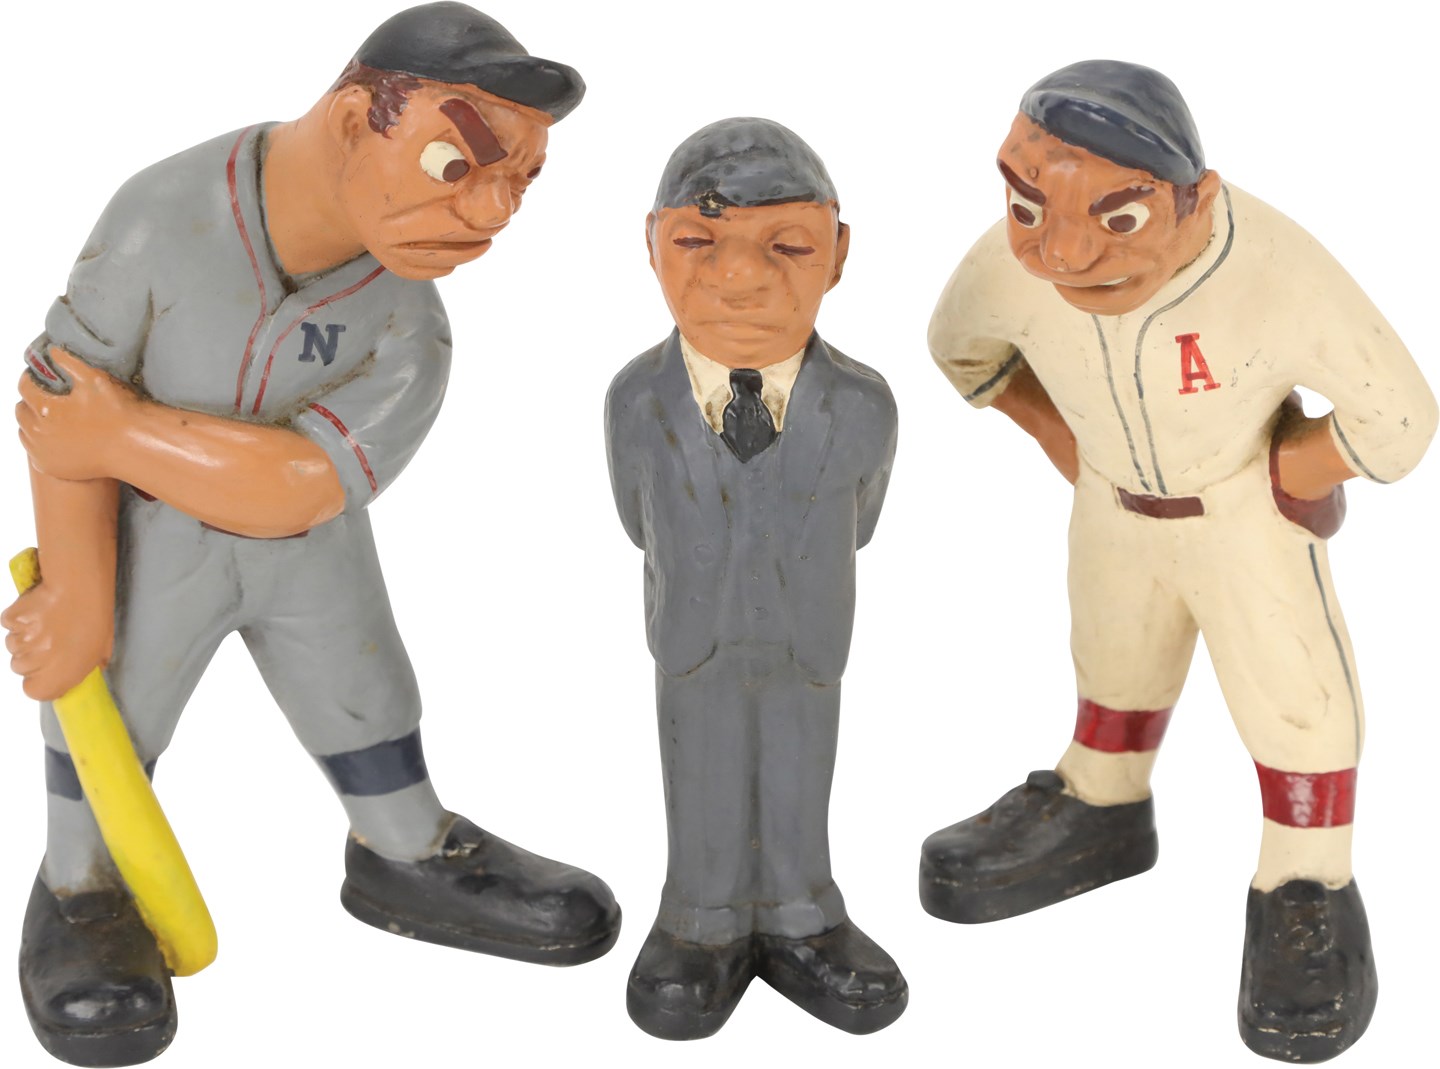 - 1941 Baseball Figurine Set by Lafayette Rittgers